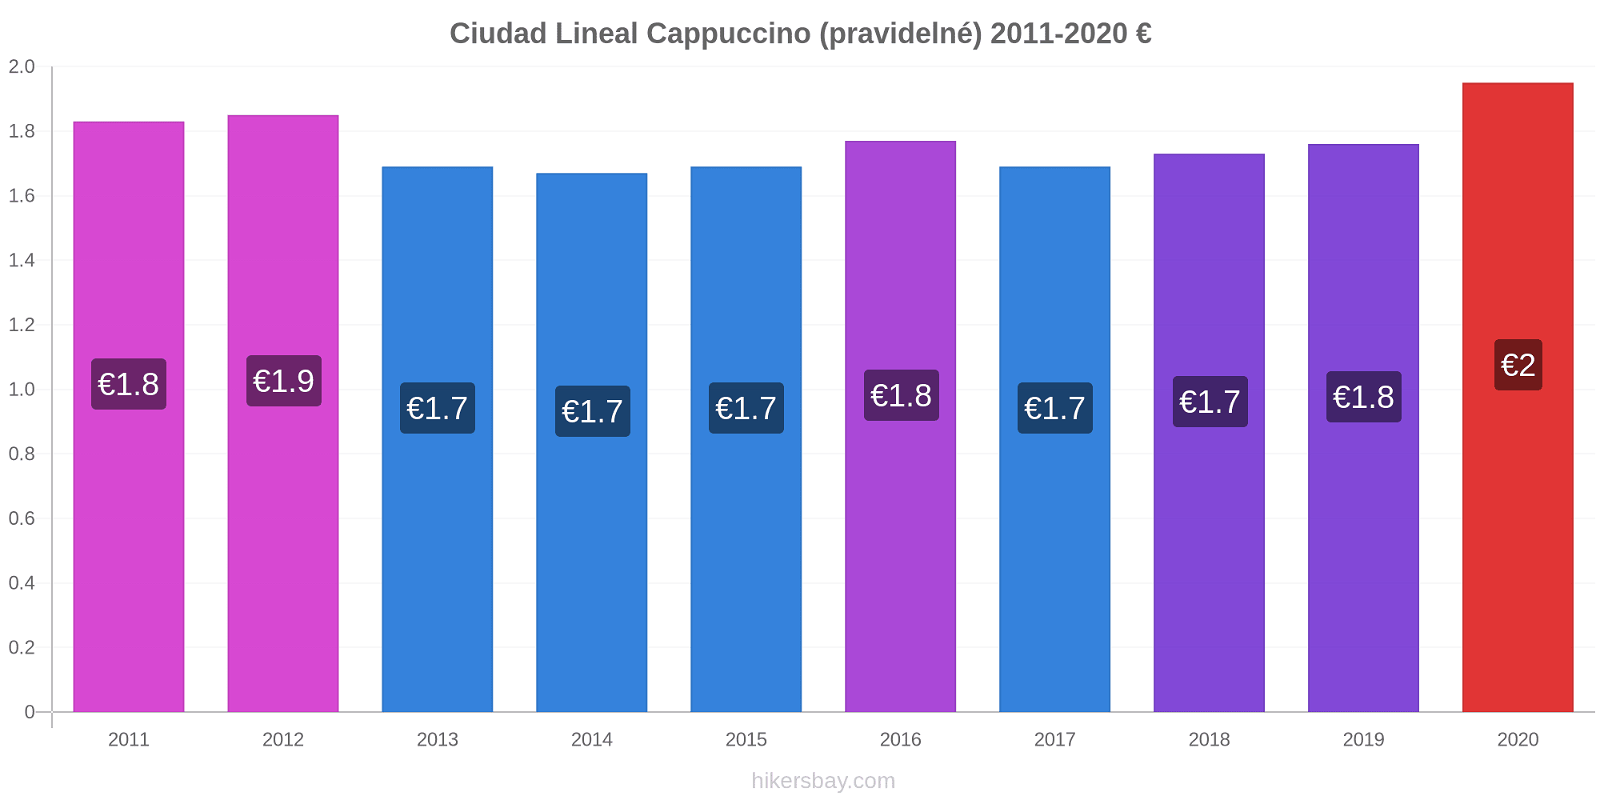 Ciudad Lineal změny cen Cappuccino (pravidelné) hikersbay.com